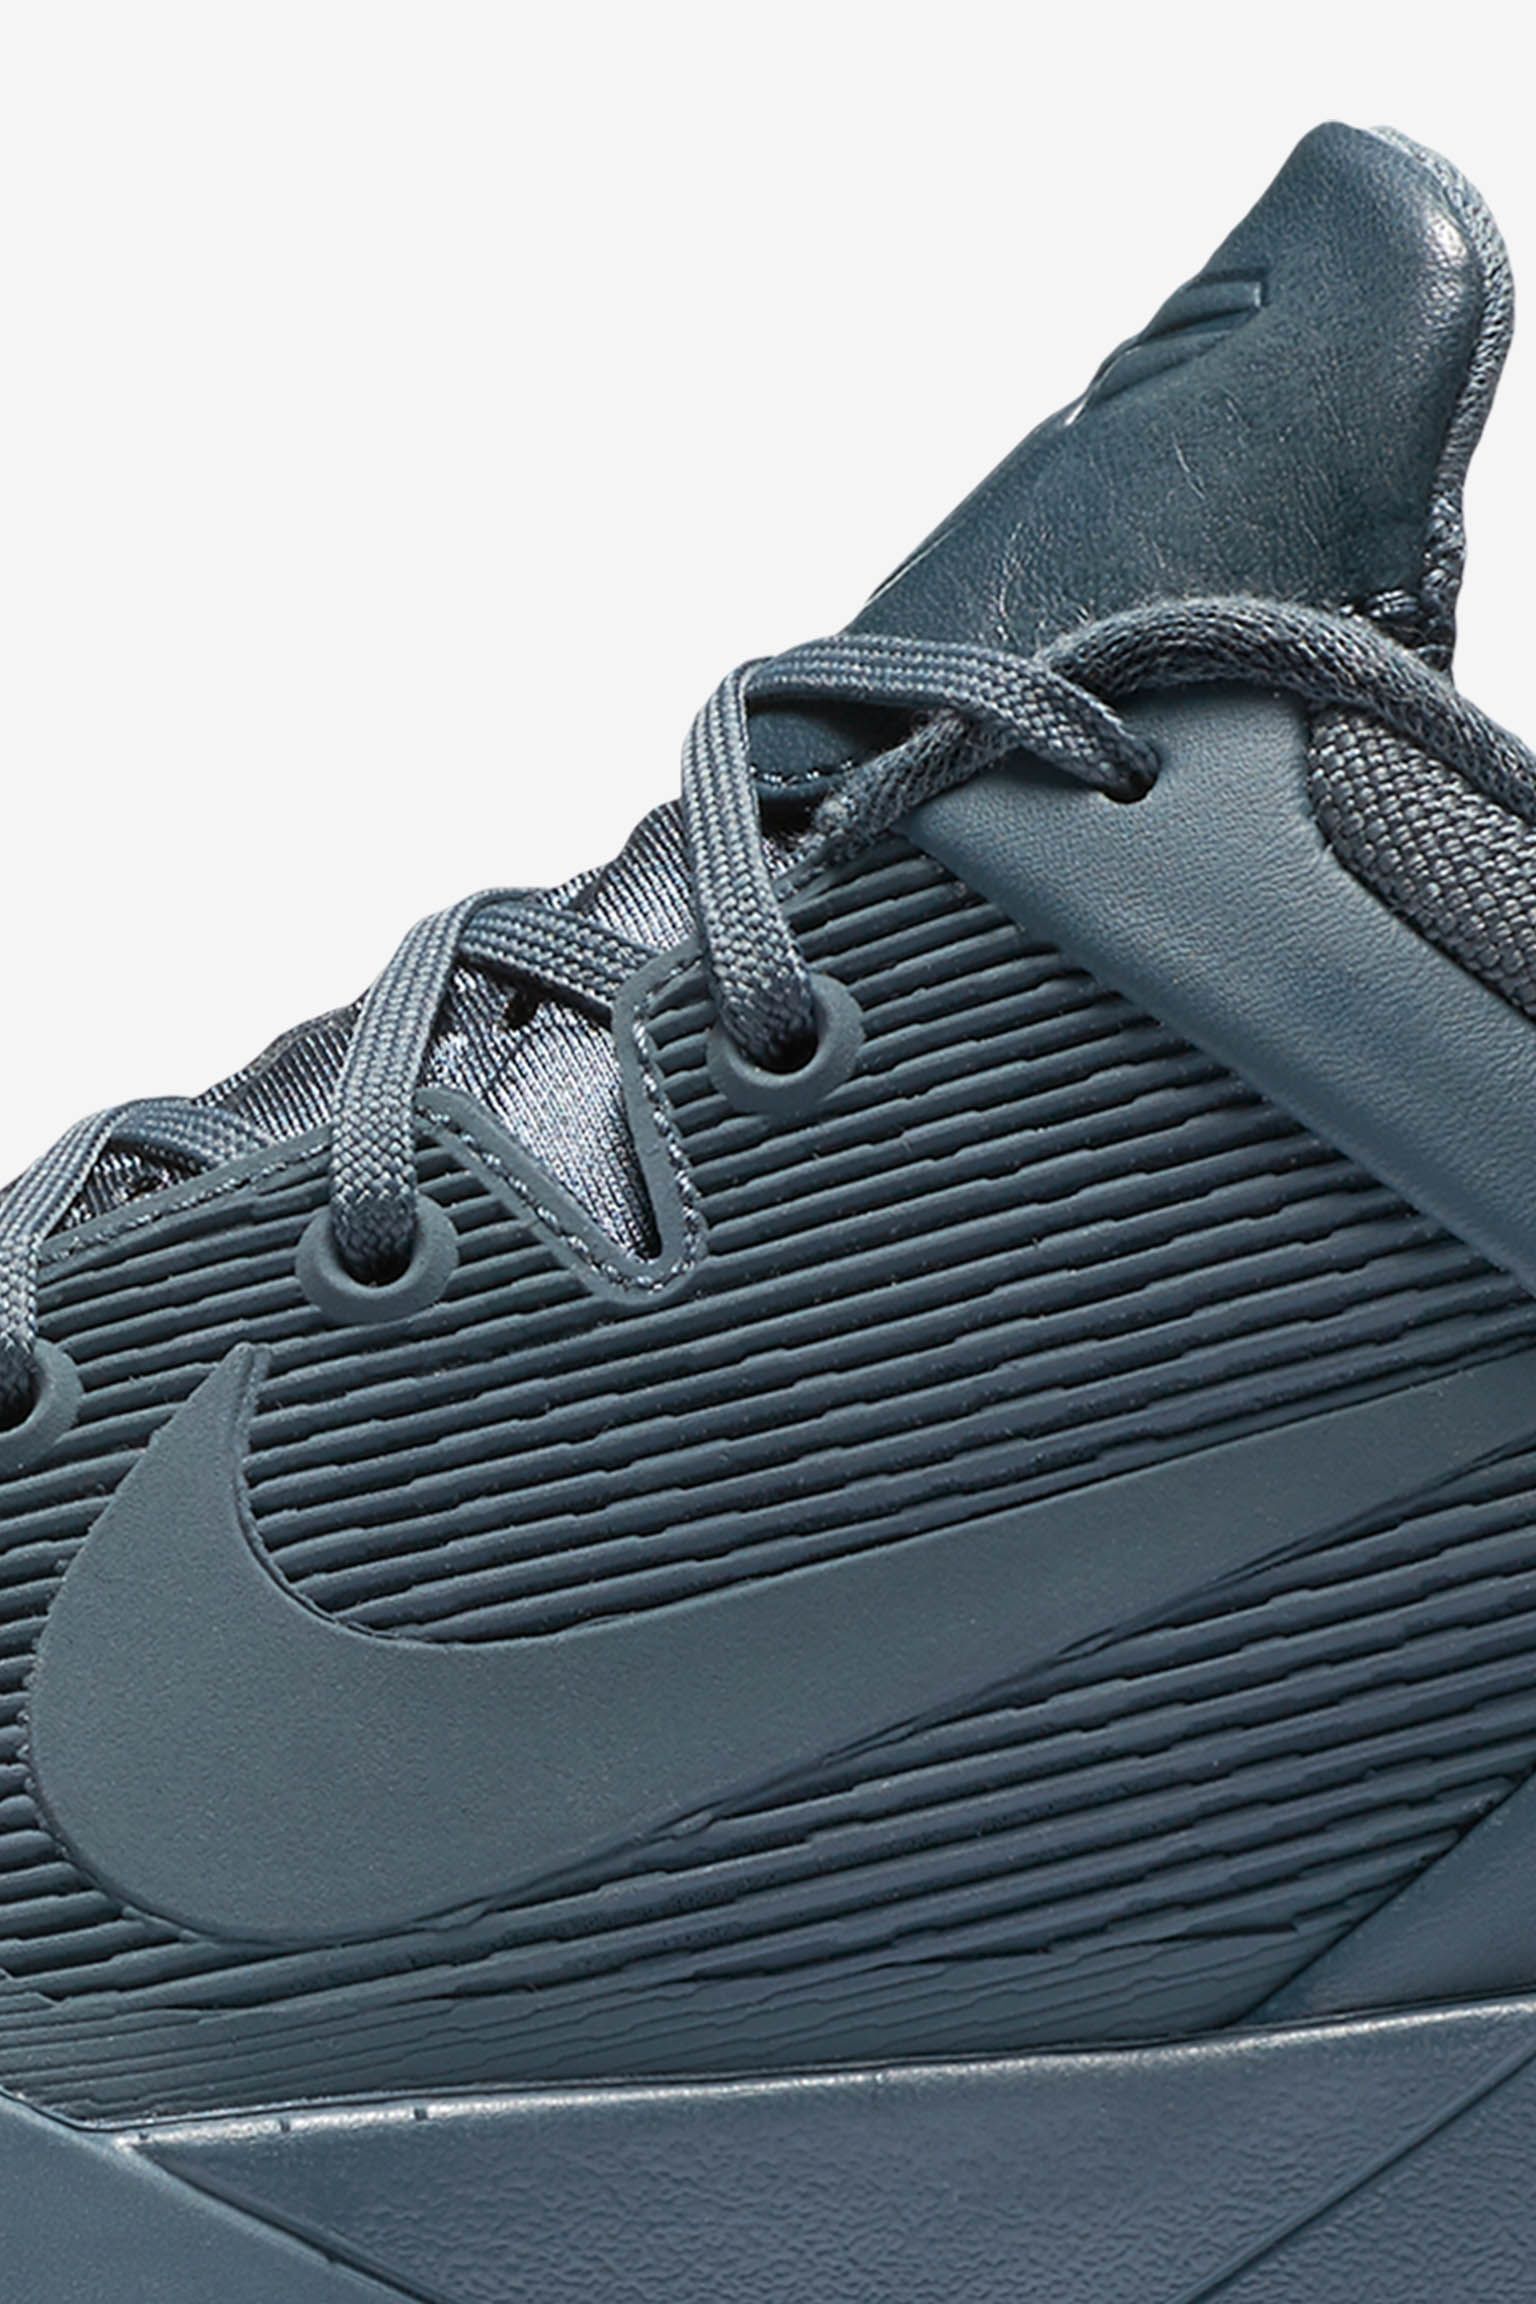 The Nike Kobe A.D. Black Mamba Releases This Week •